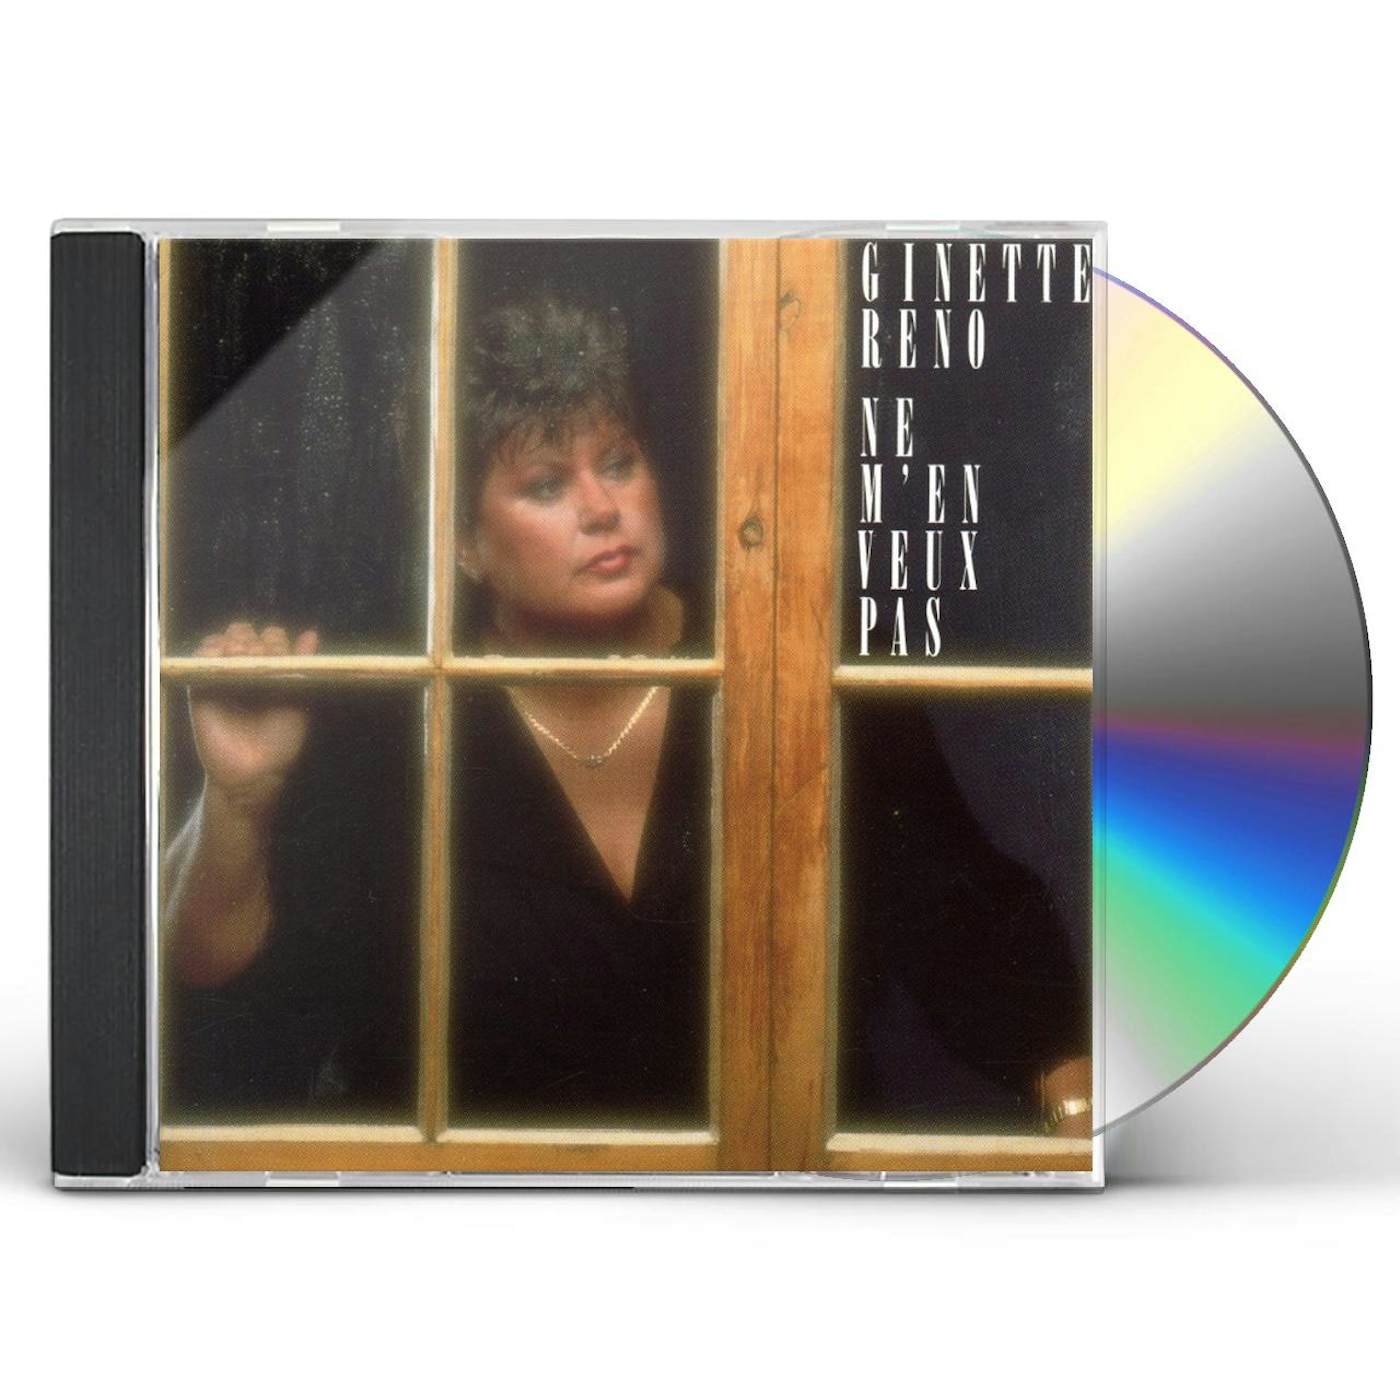 Ginette Reno NE'M EN VEUX PAS CD